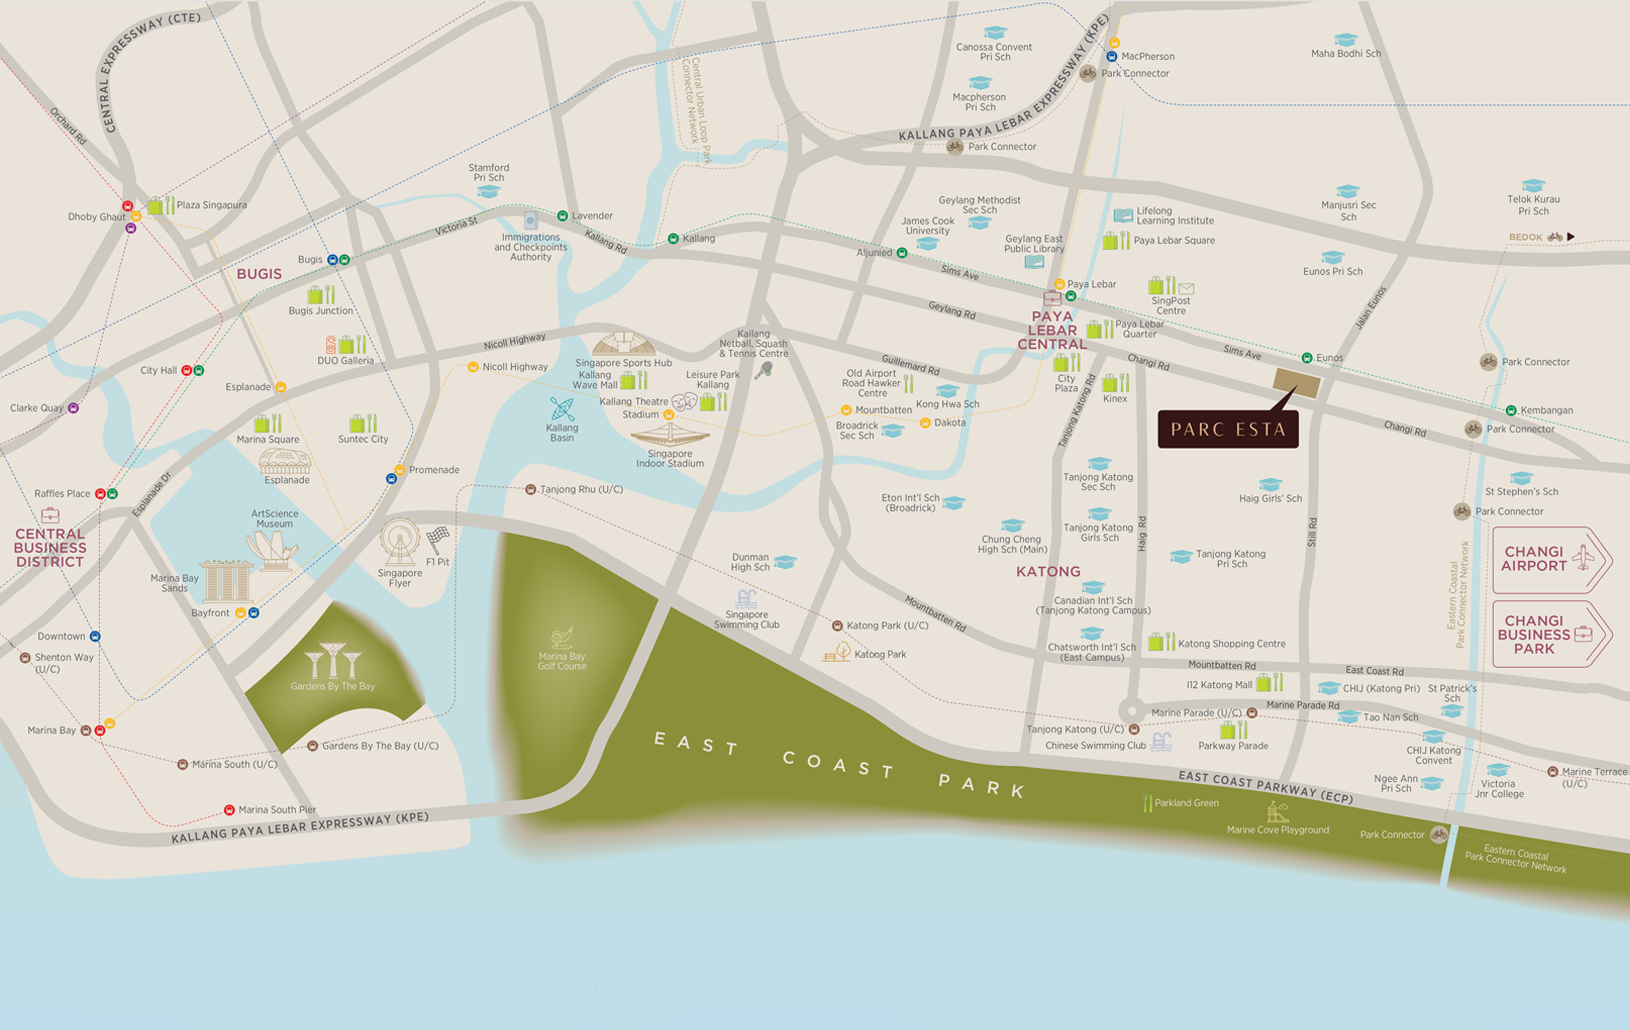 Parc Esta Location Map